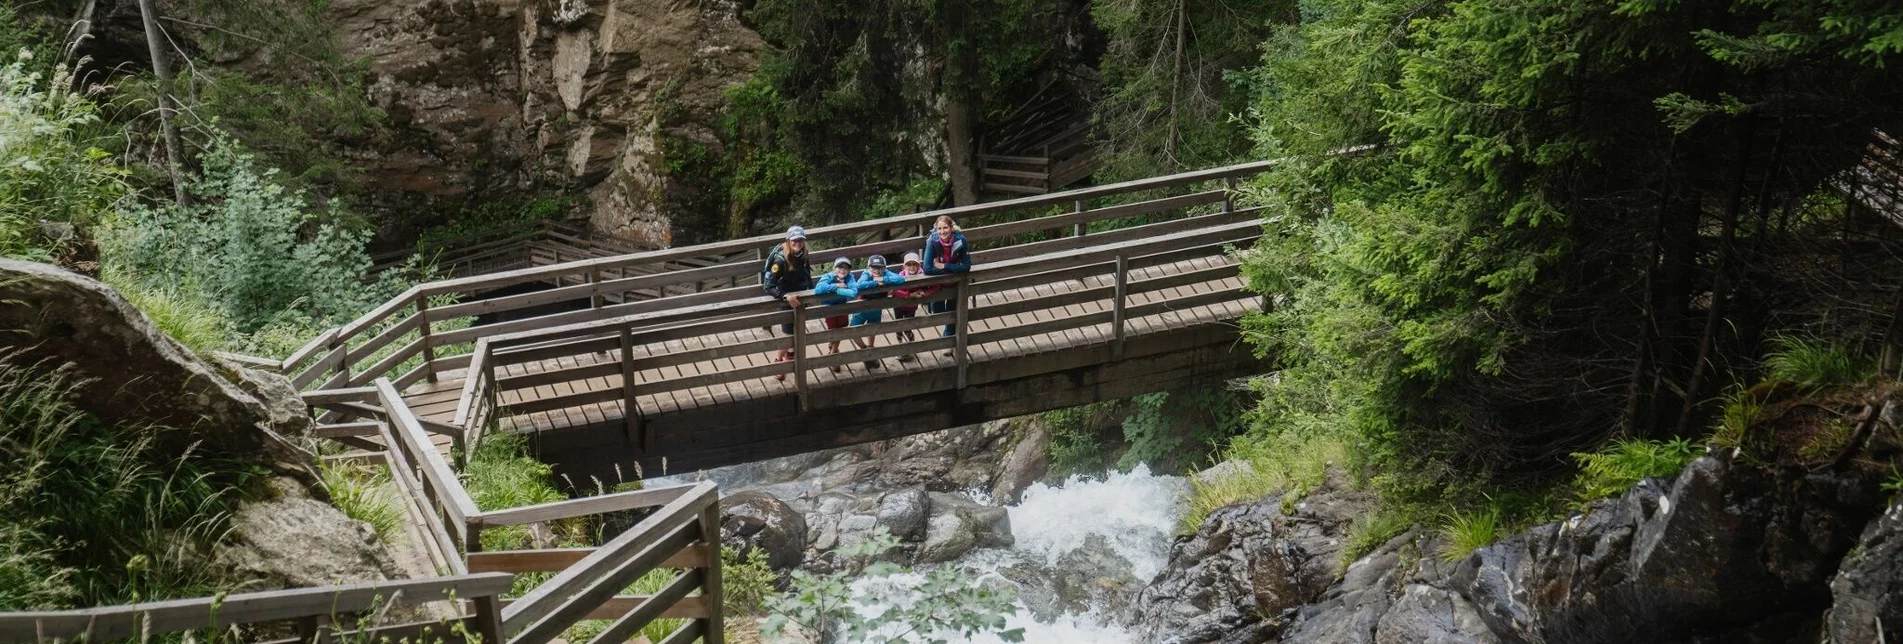 Hiking route Günster waterfall hike - Touren-Impression #1 | © Tourismusverband Region Murau